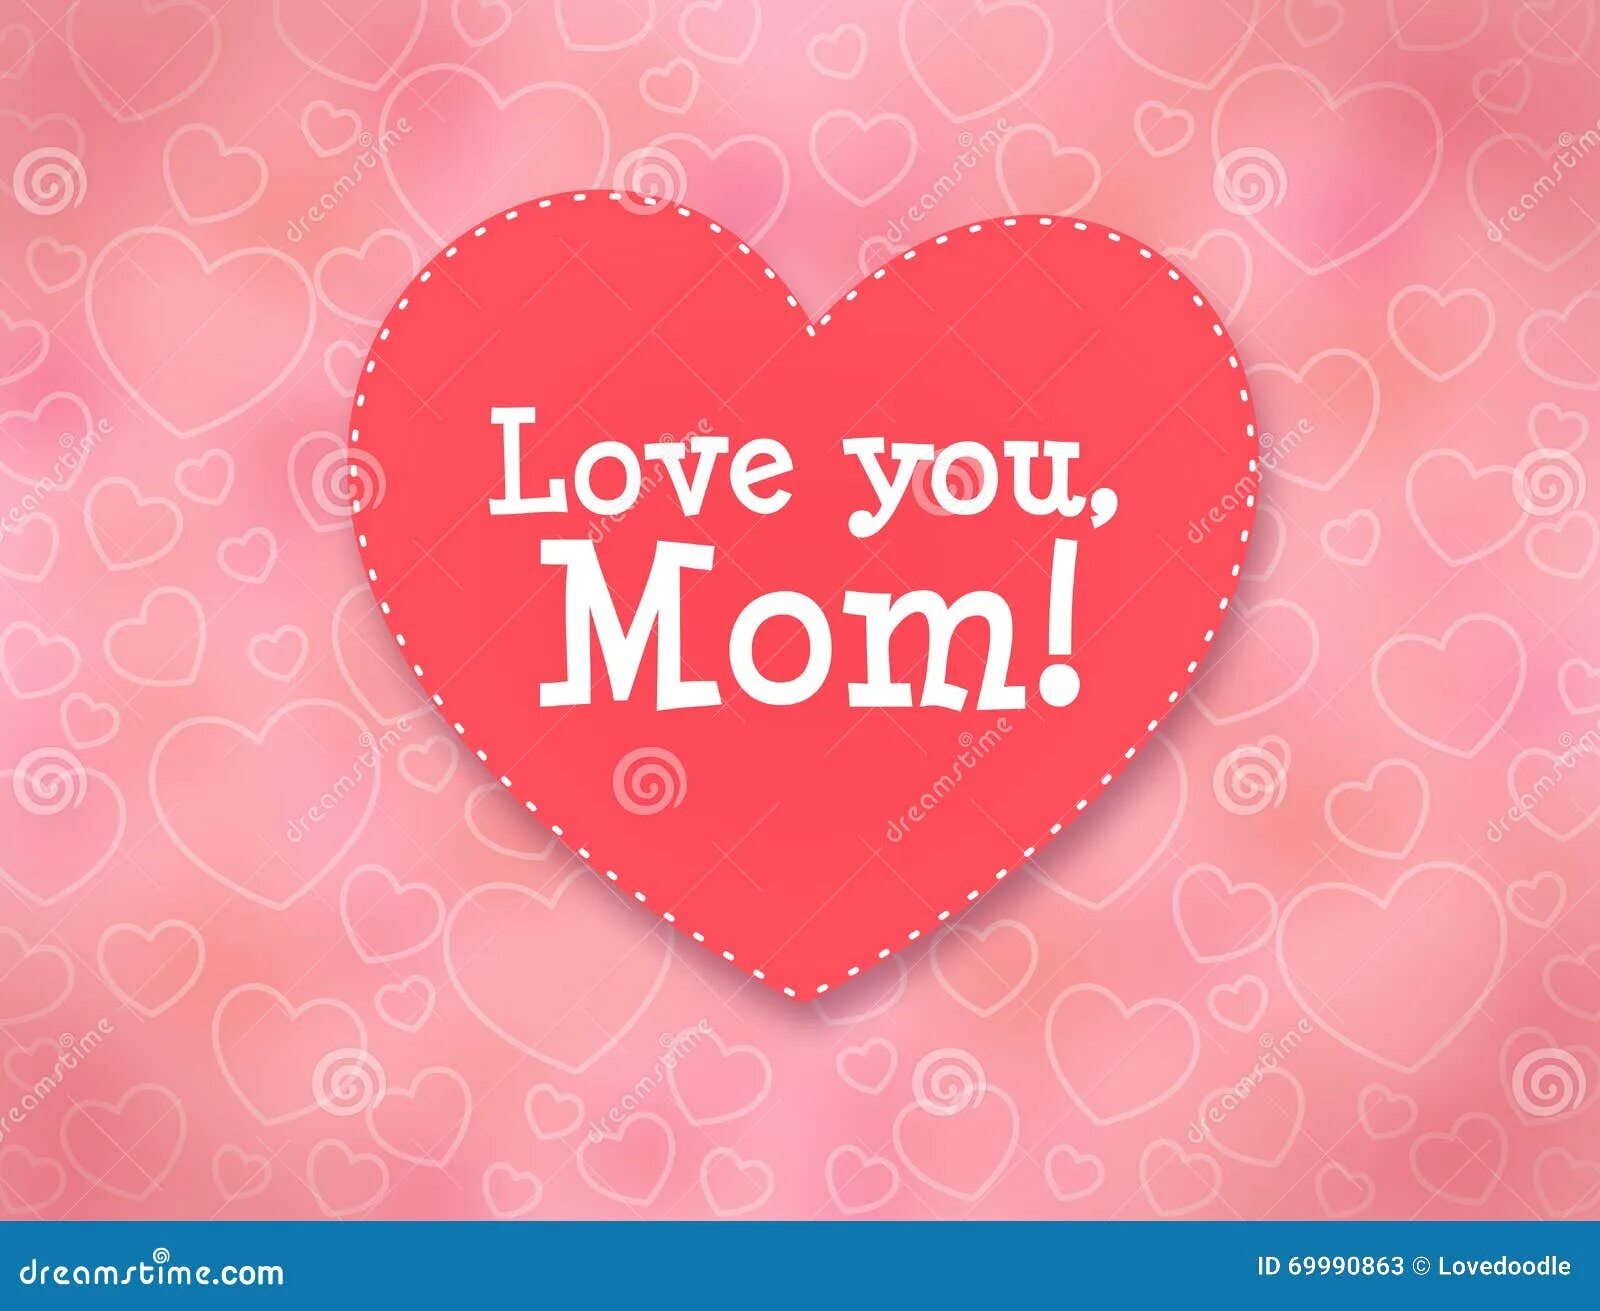 Mom loves mom videos. Мама Love you. I Love you мама. Сердце i Love you mom. I Love you mom красивая надпись.